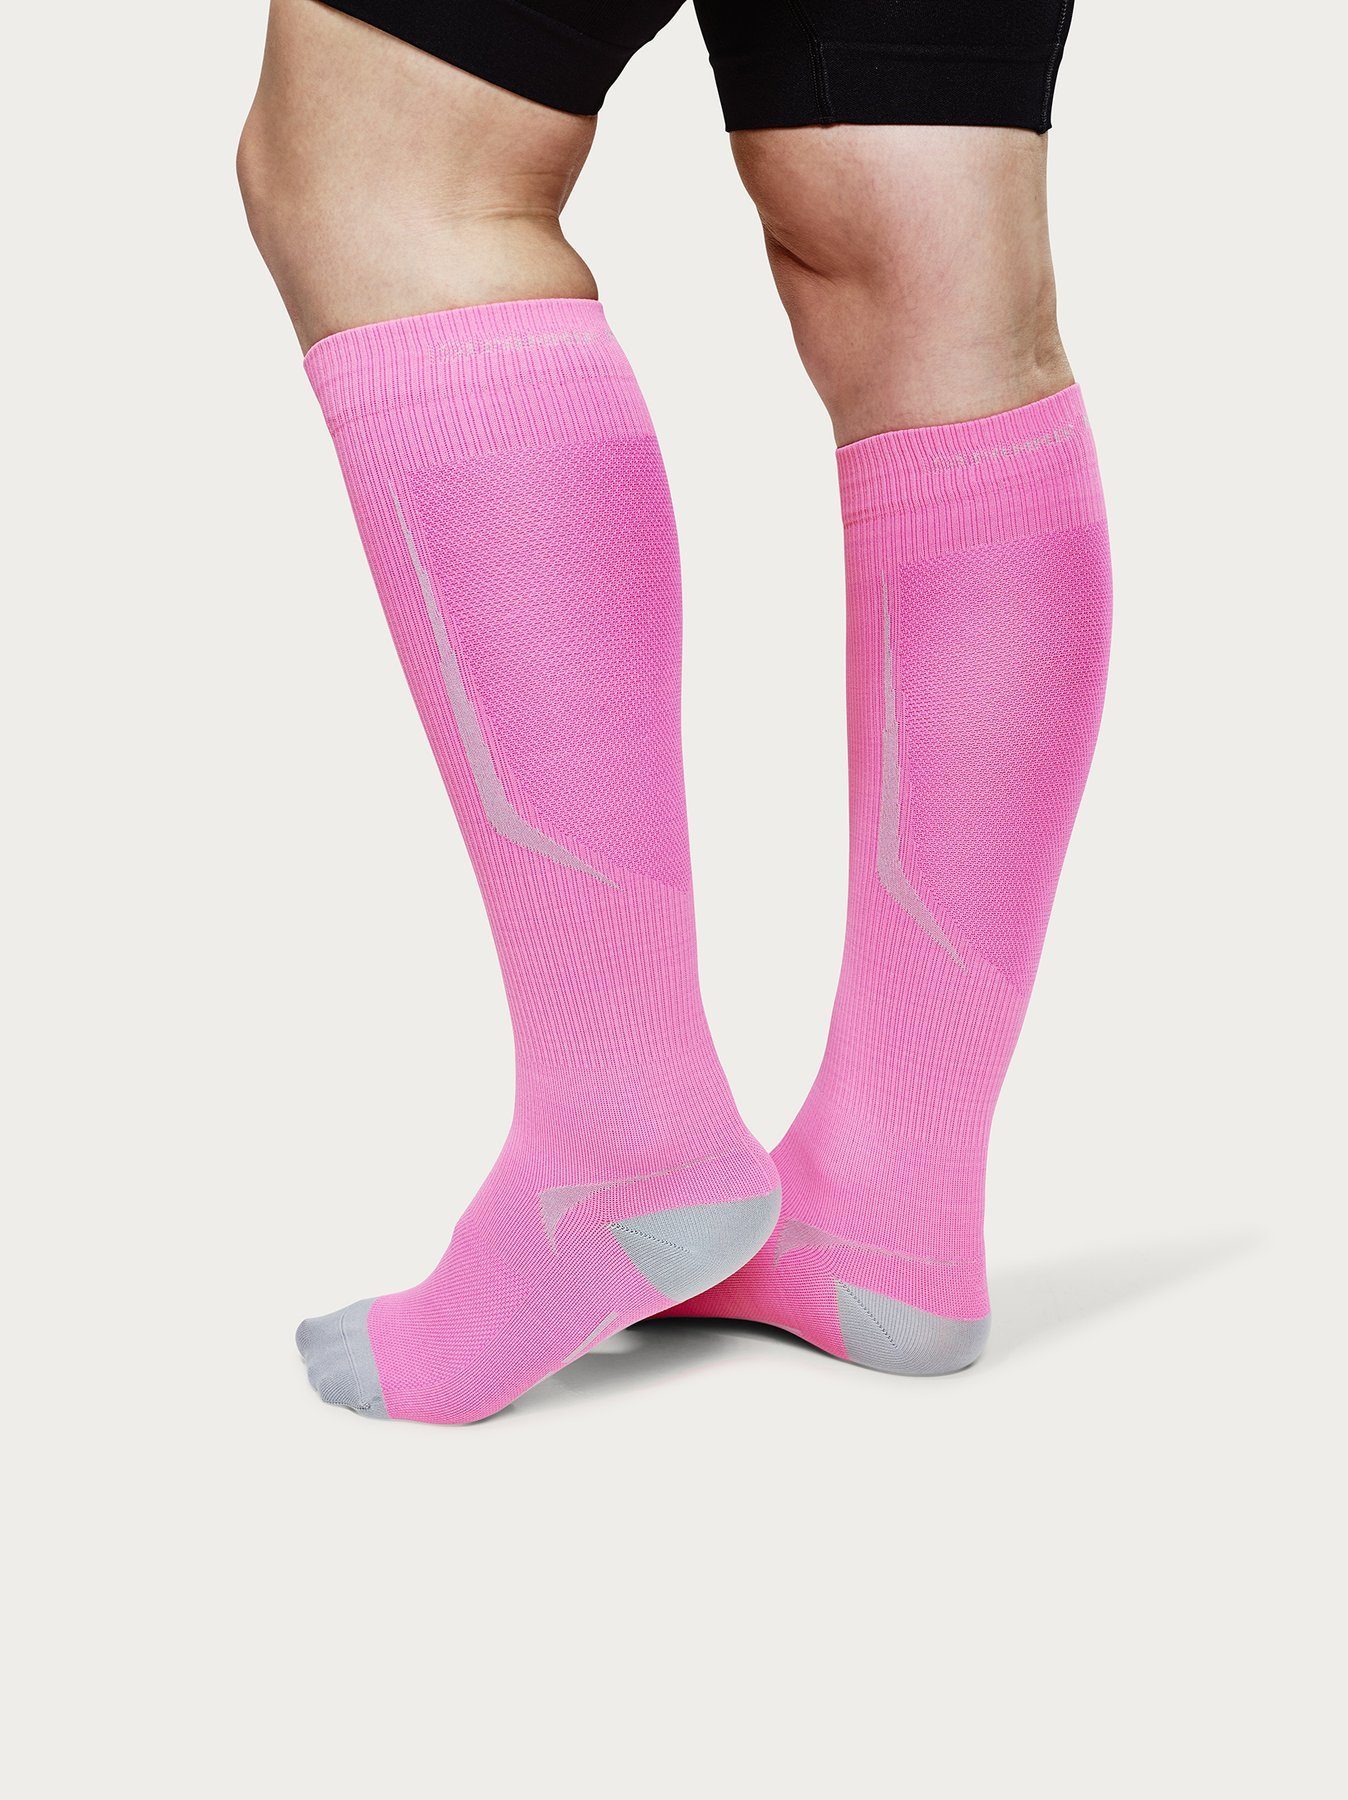 Performance® Women Pink Compression antibakteriell Strammer atmungsaktiv, Socks Kompressionsstrümpfe Max